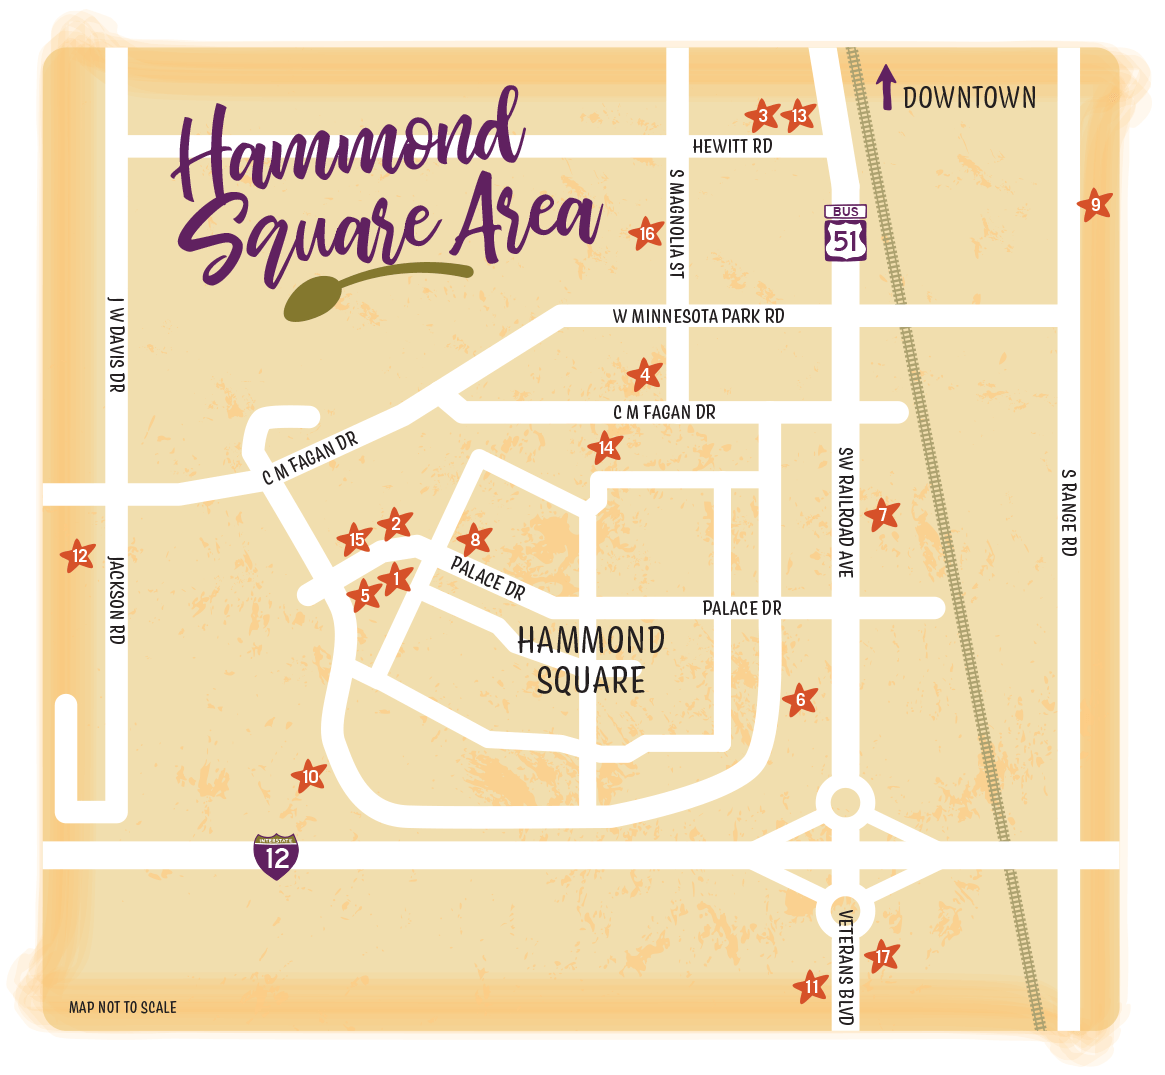 Hammond Square Area Restaurants Map